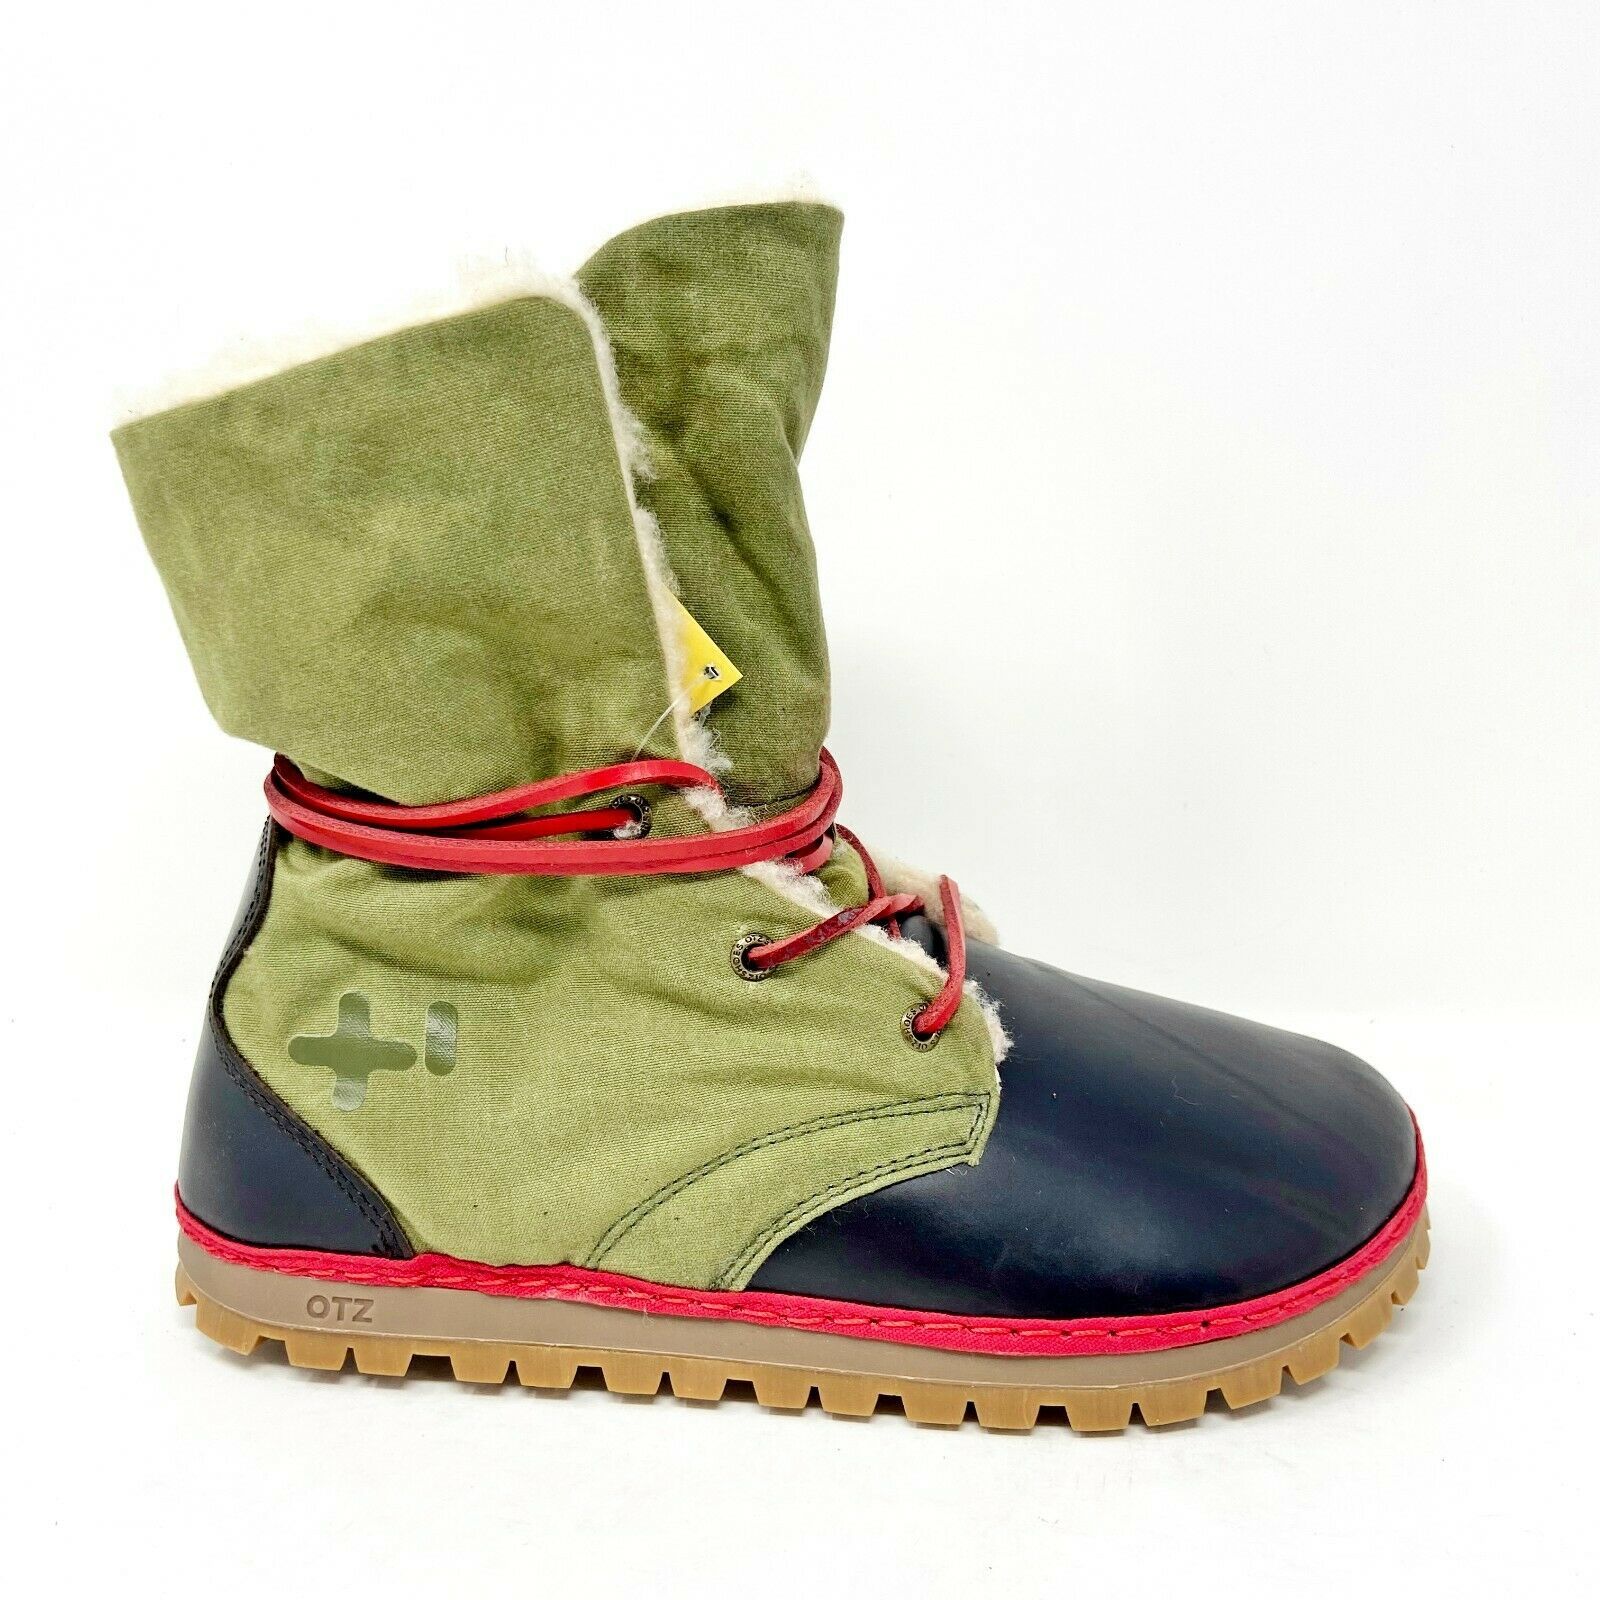 OTZ Shoes Troop Cognac Moss Mens Boots 04108 646